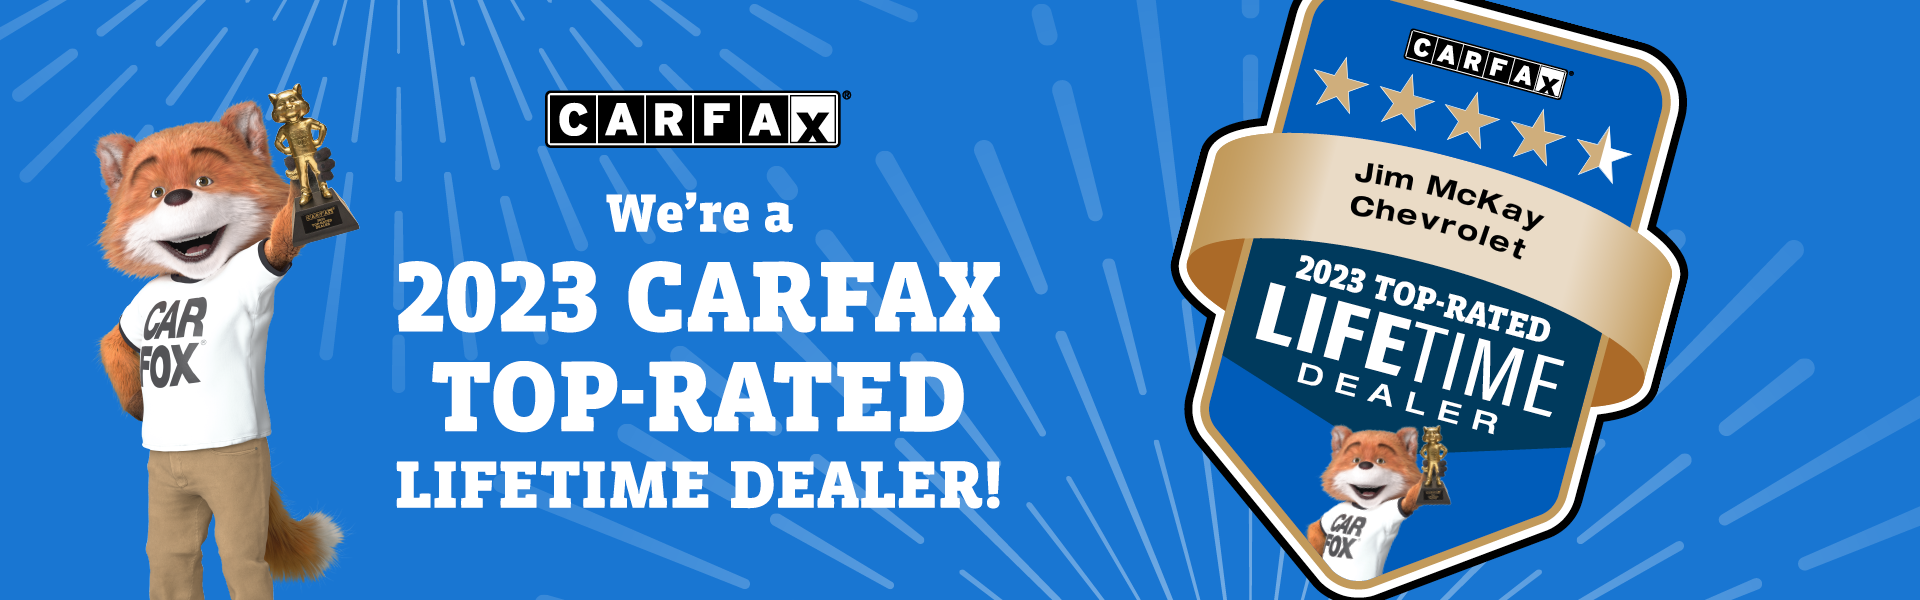 CarFax Top Rated Dealer in Fairfax, VA - Jim McKay Chevrolet